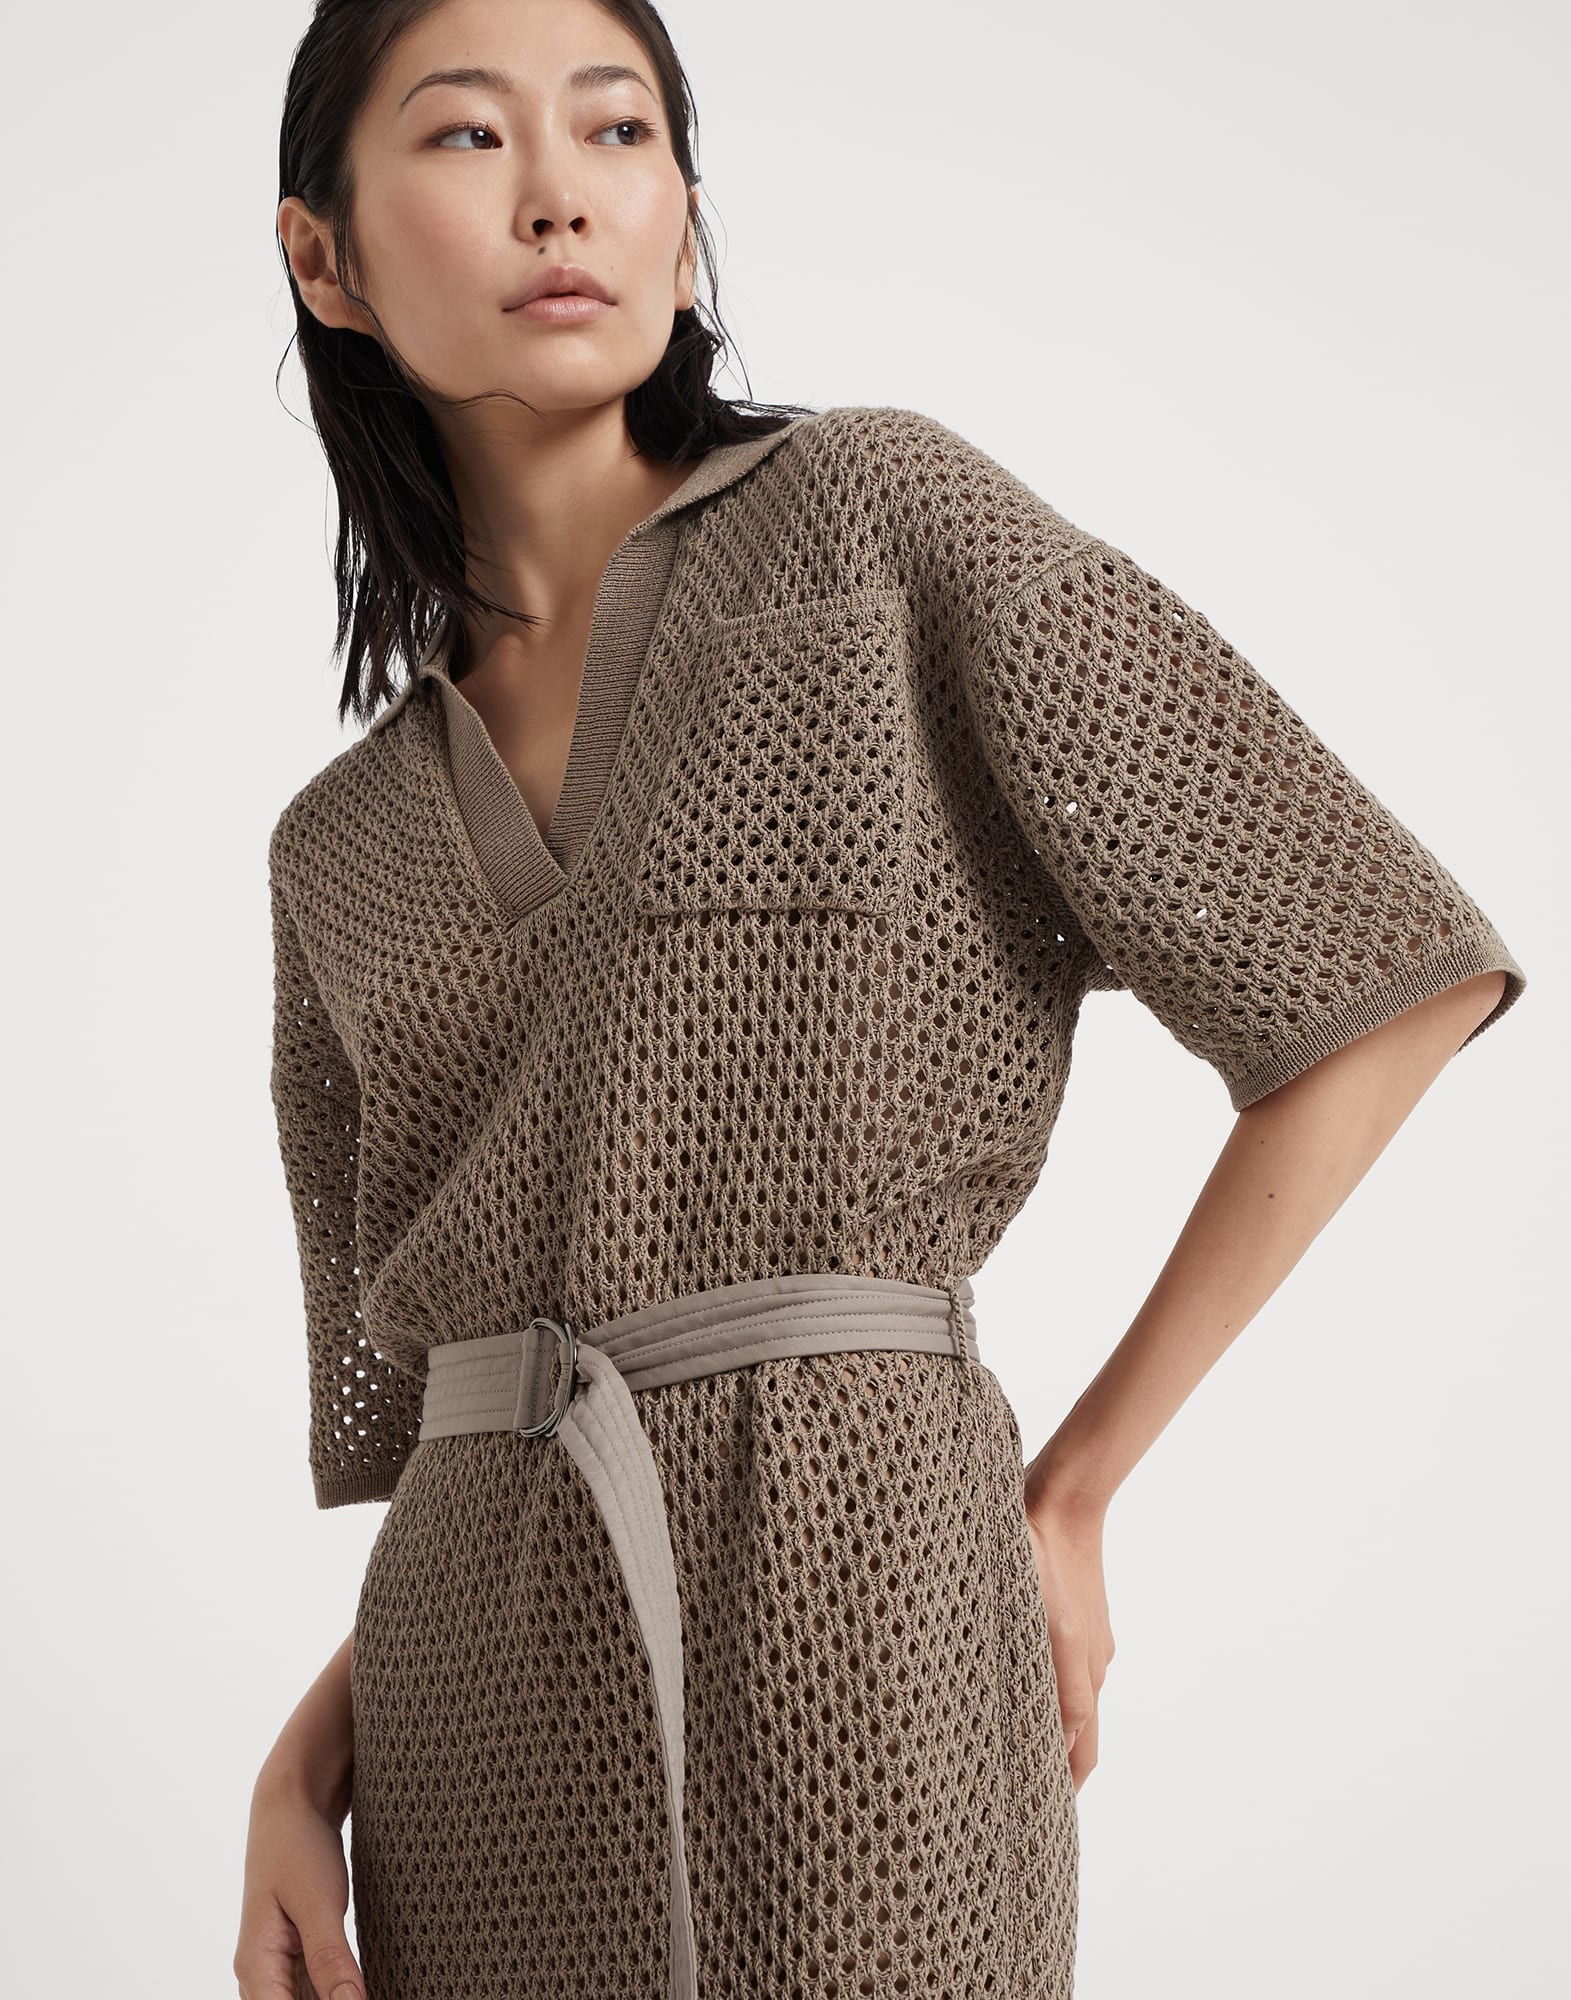 Cotton net knit dress with belt - 3